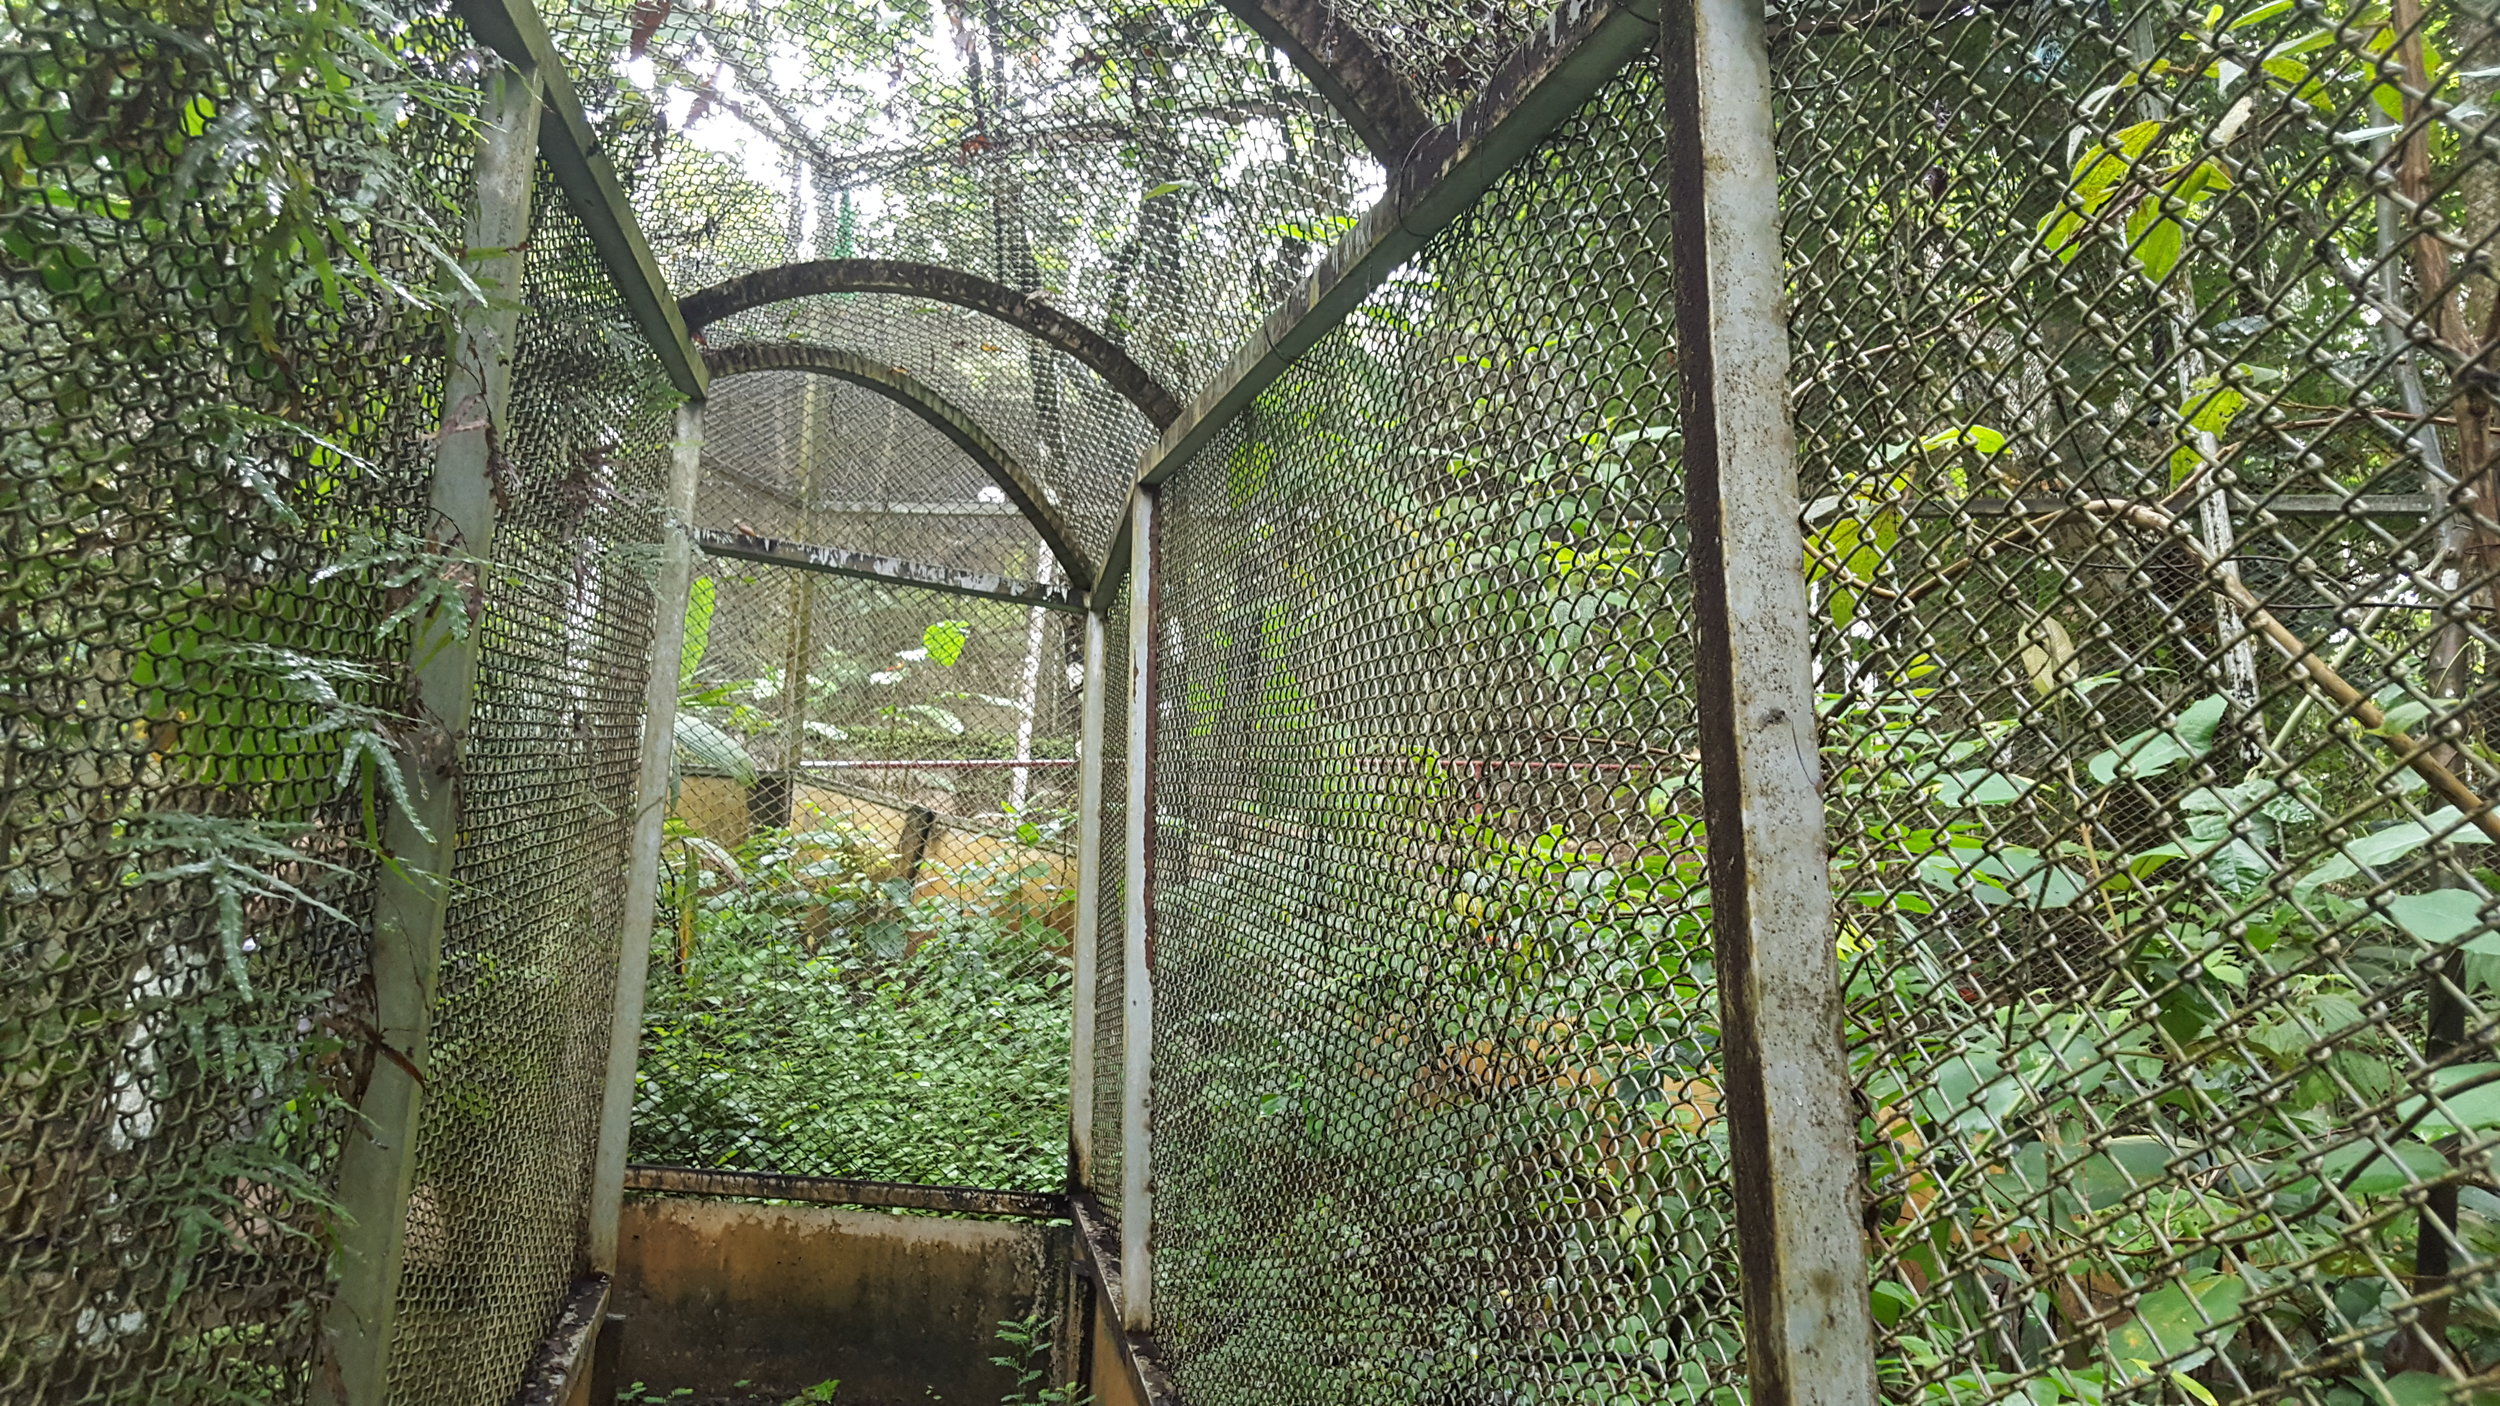 Large squirrel monkey (mono titi) enclosure